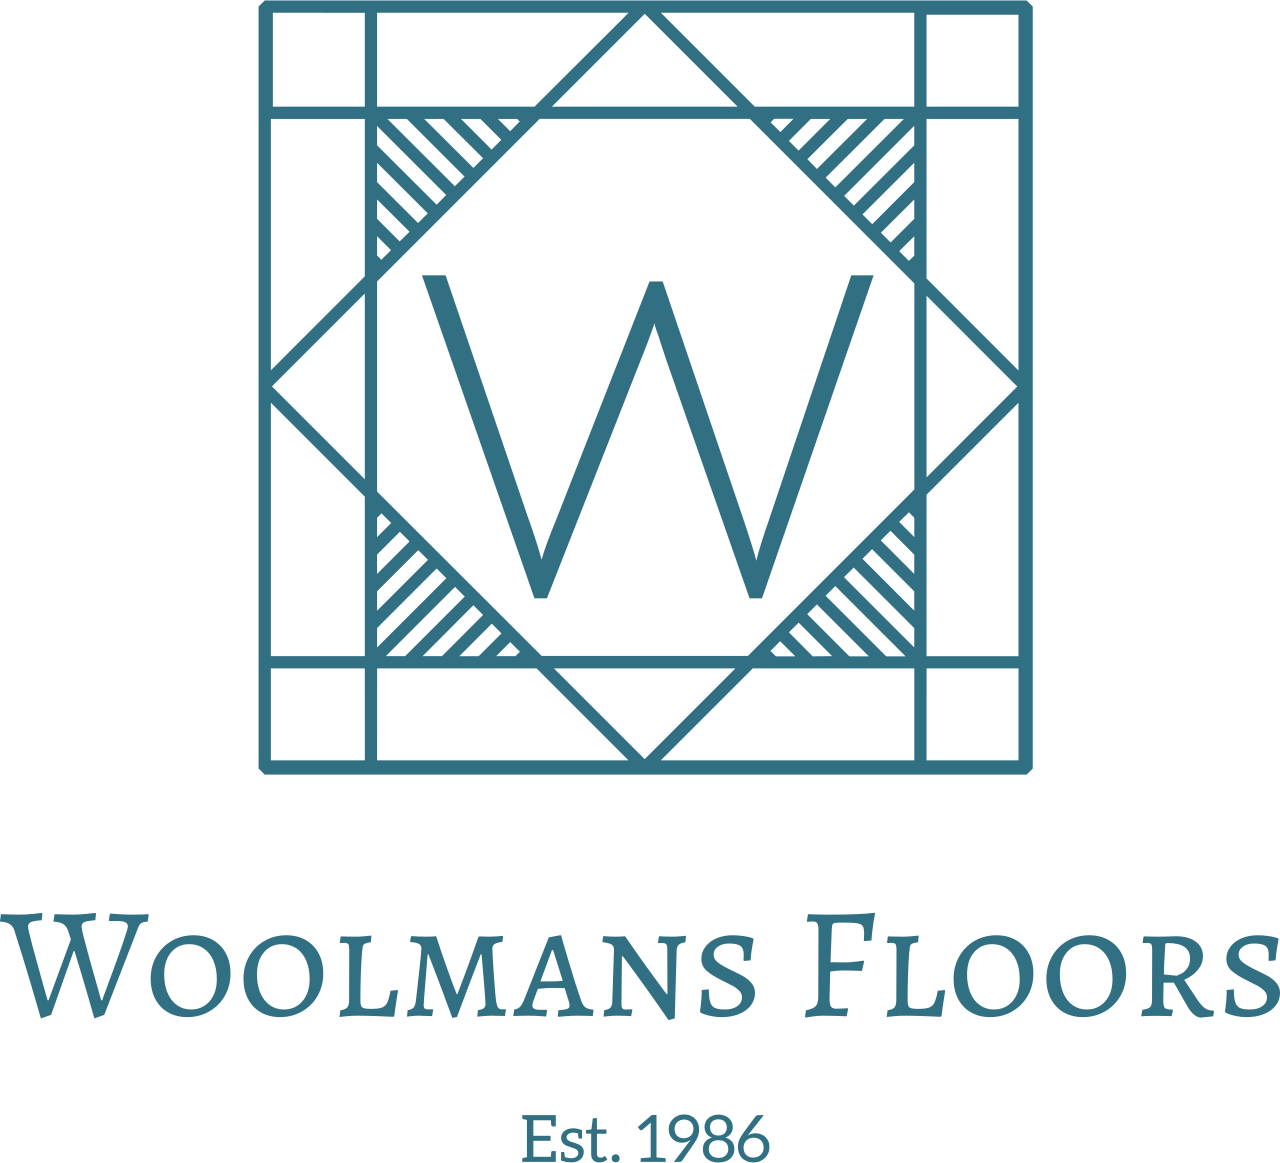 Woolmans Floors supplying quality wooden flooring 's web page